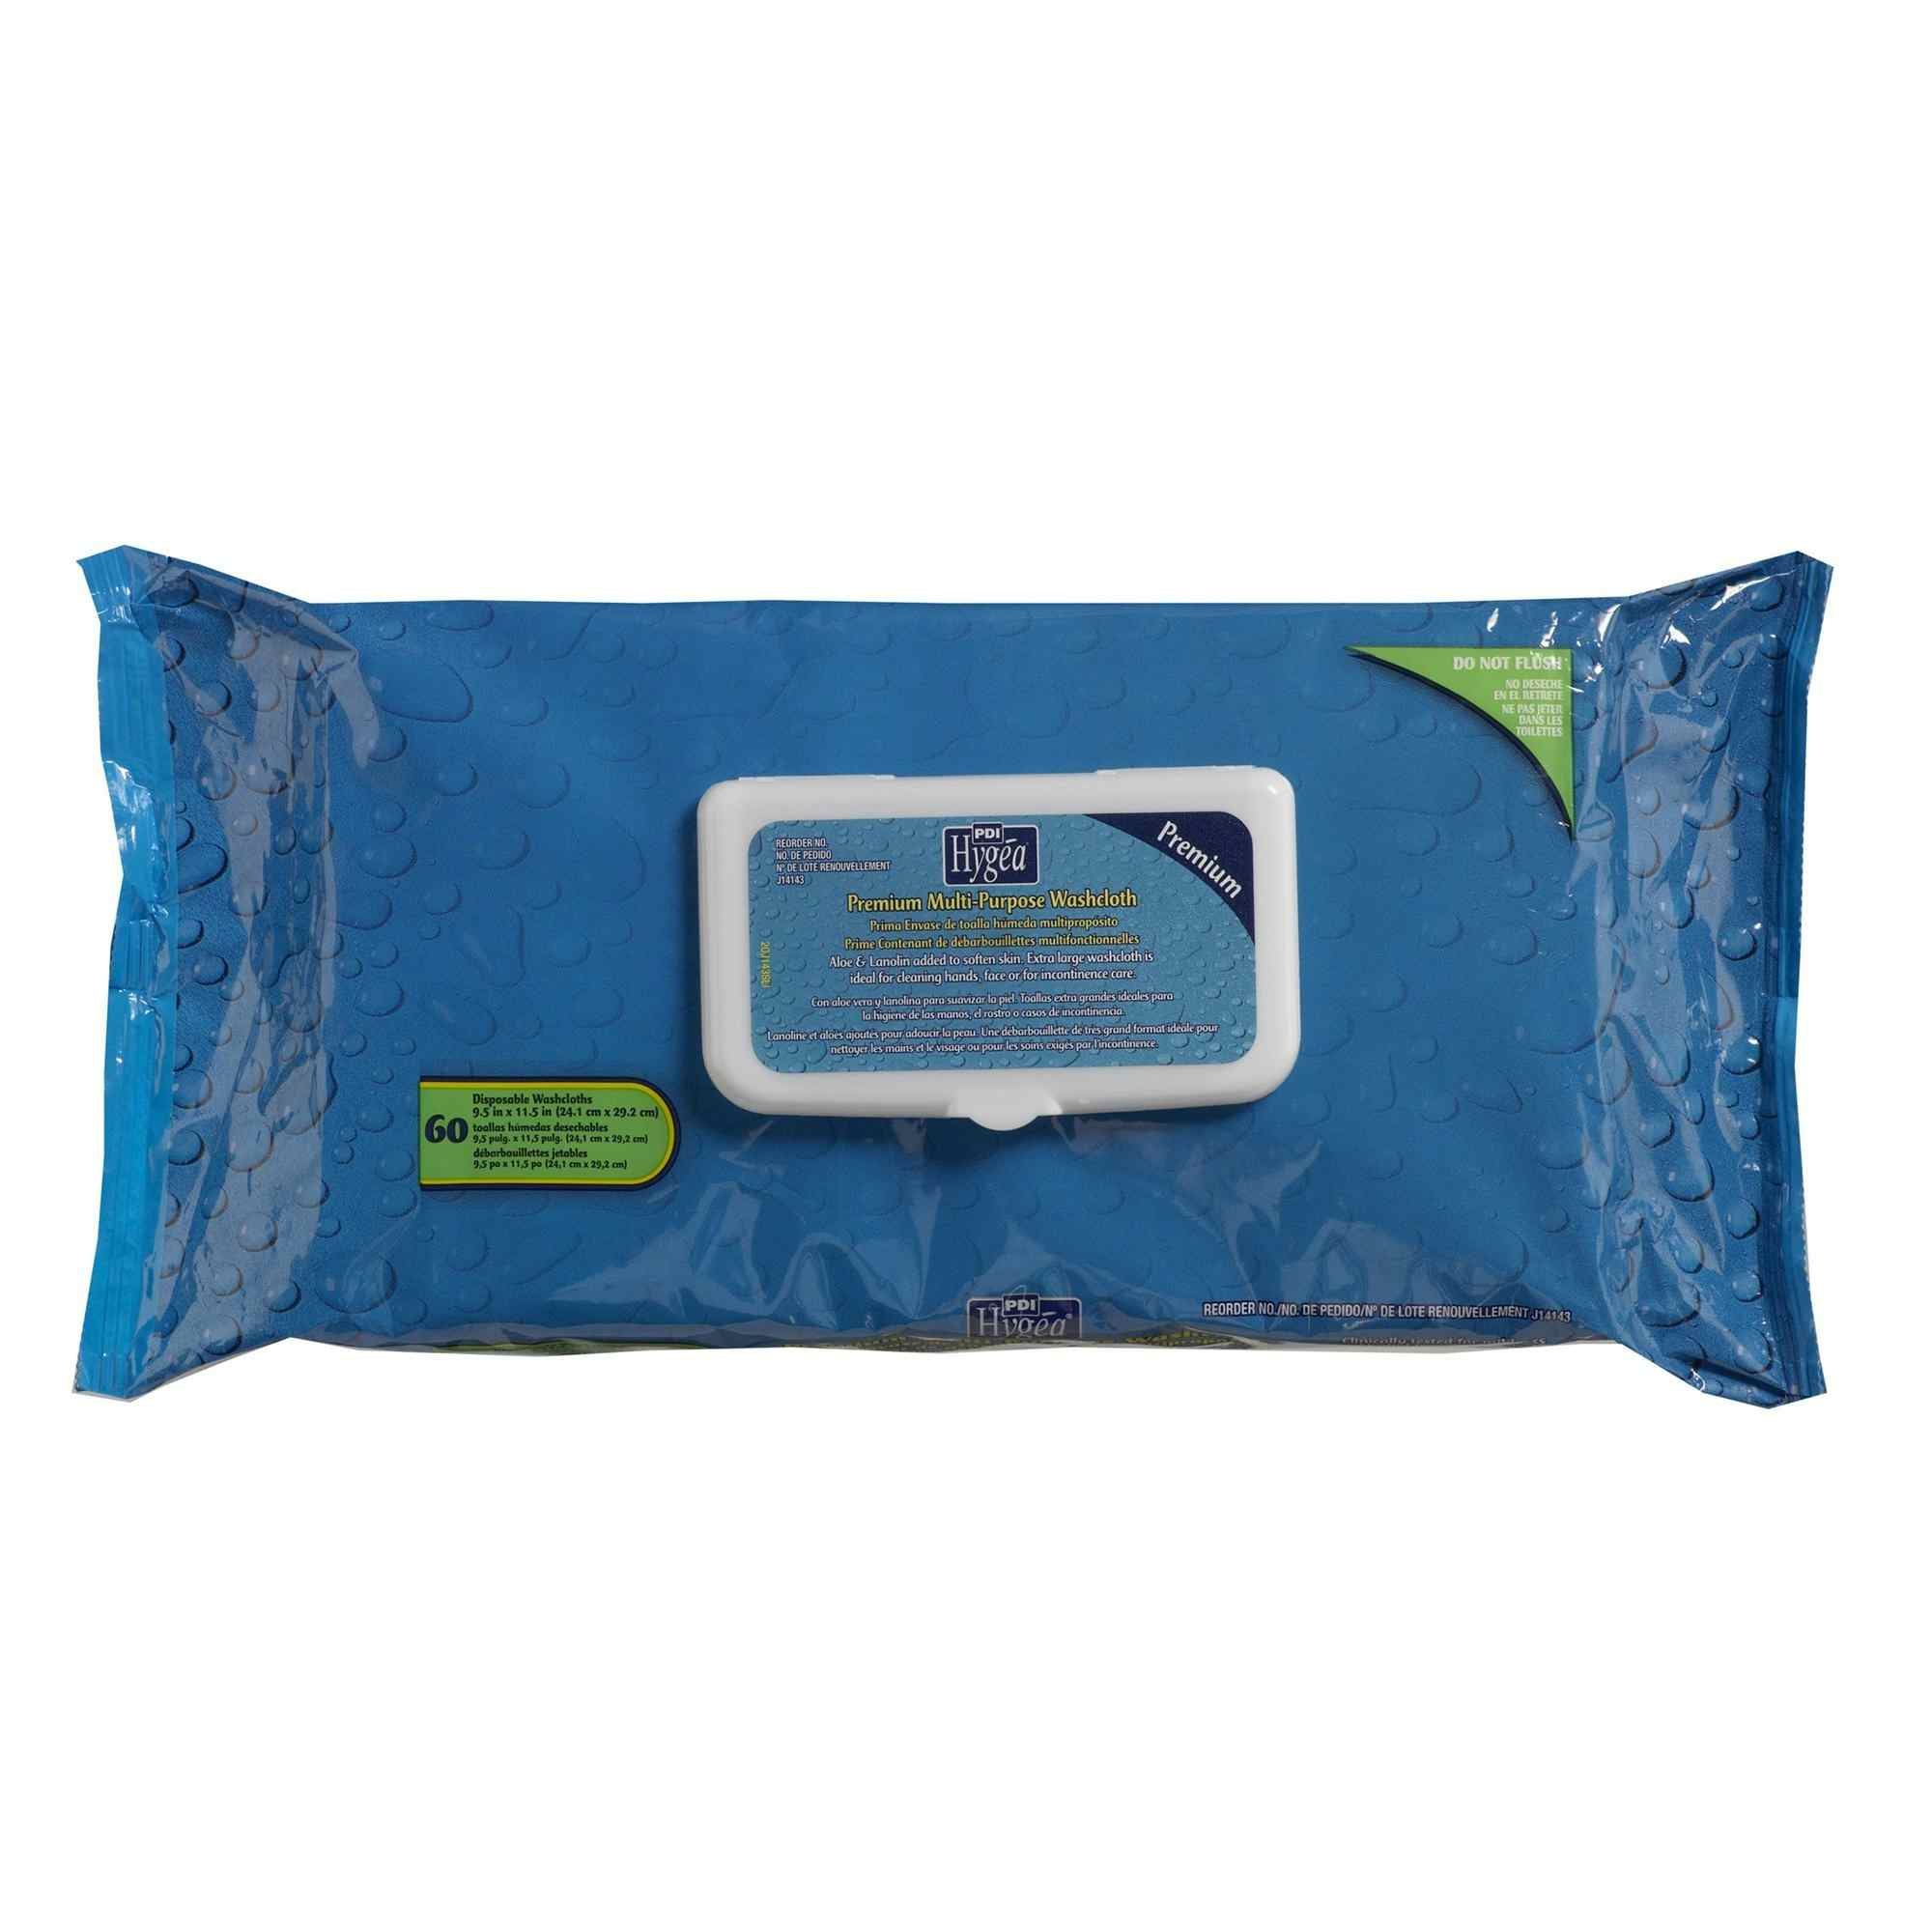 Hygea Premium Multi-Purpose Washcloths, Scented , J14143, 1 Box